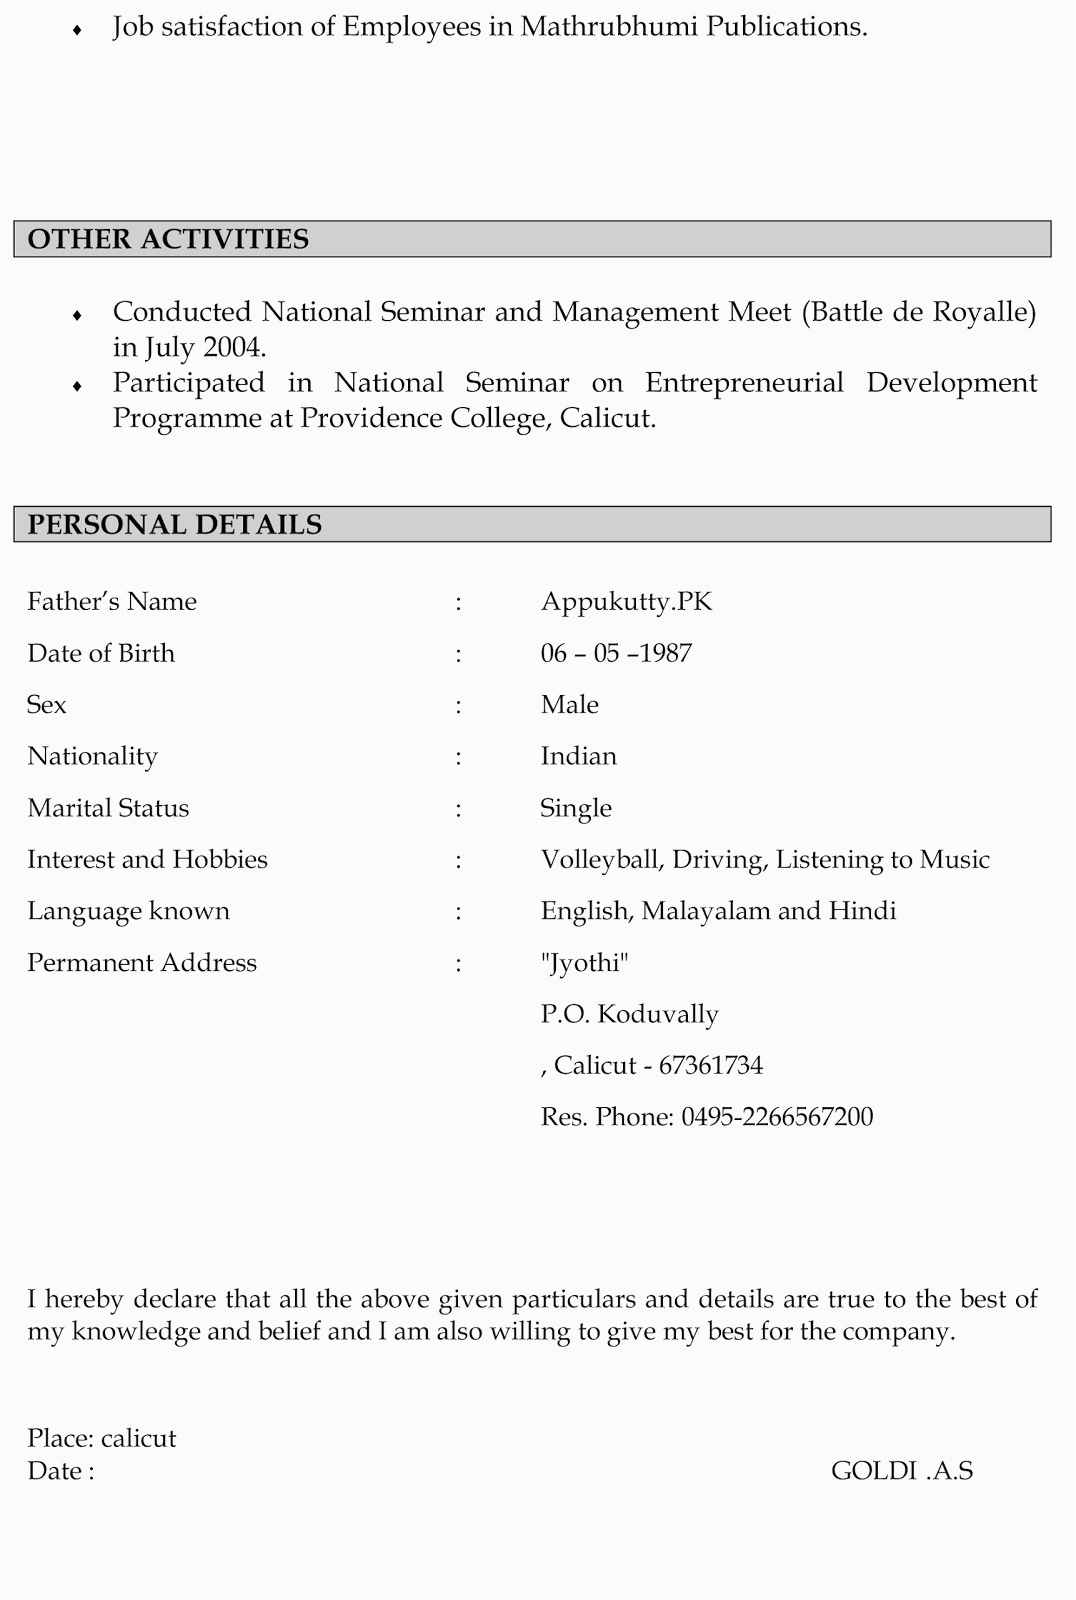 Sample Resume format for Marriage Proposal 8 9 Biodata formats for Marriage Aikenexplorer